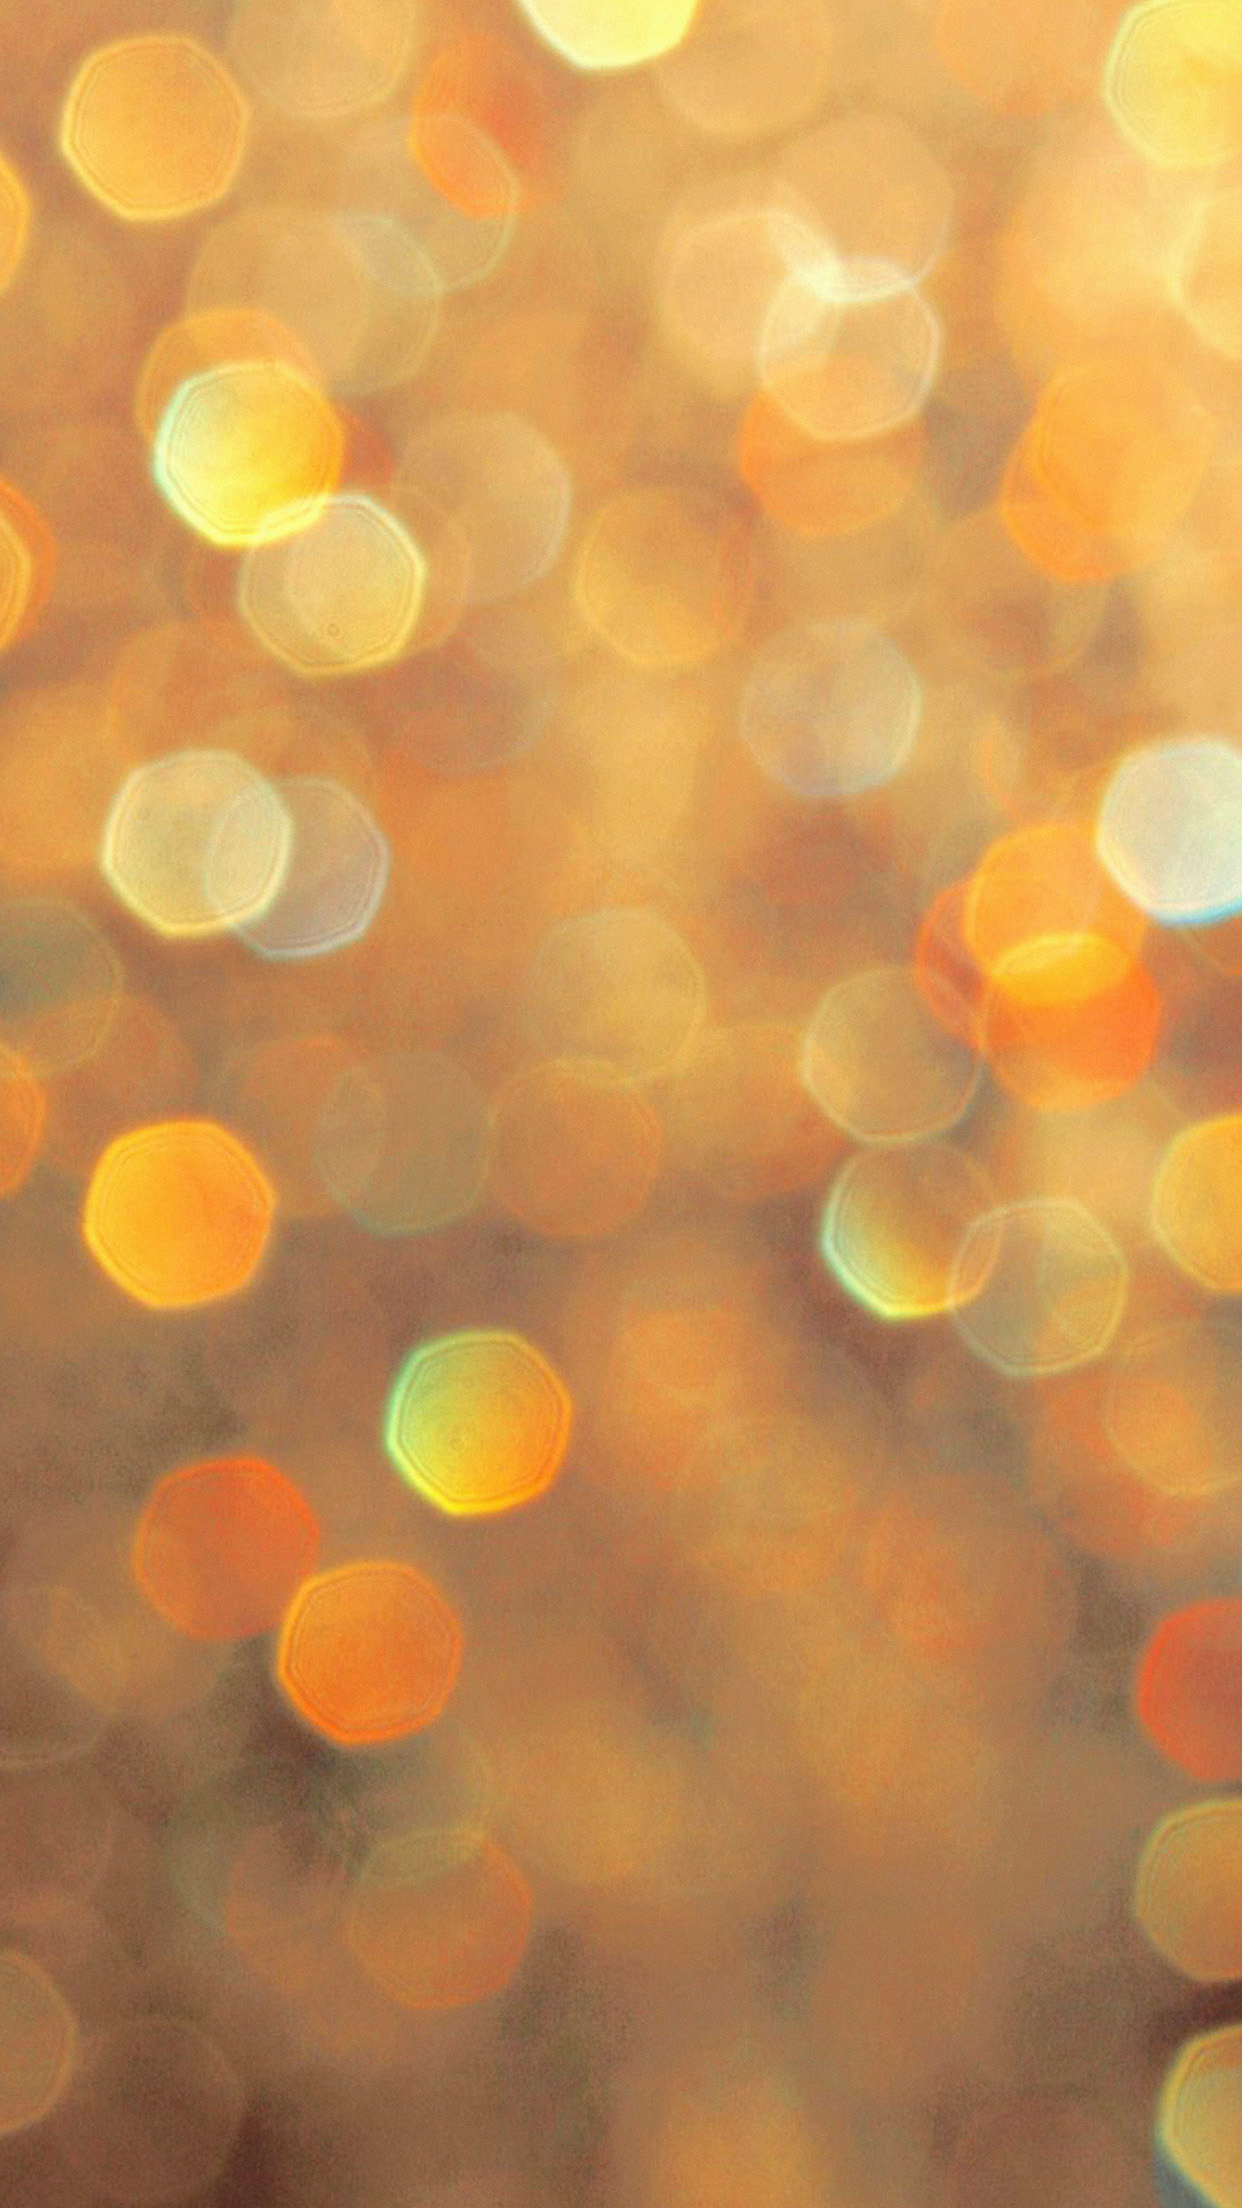 iphone wallpaper lights,orange,yellow,light,sky,amber